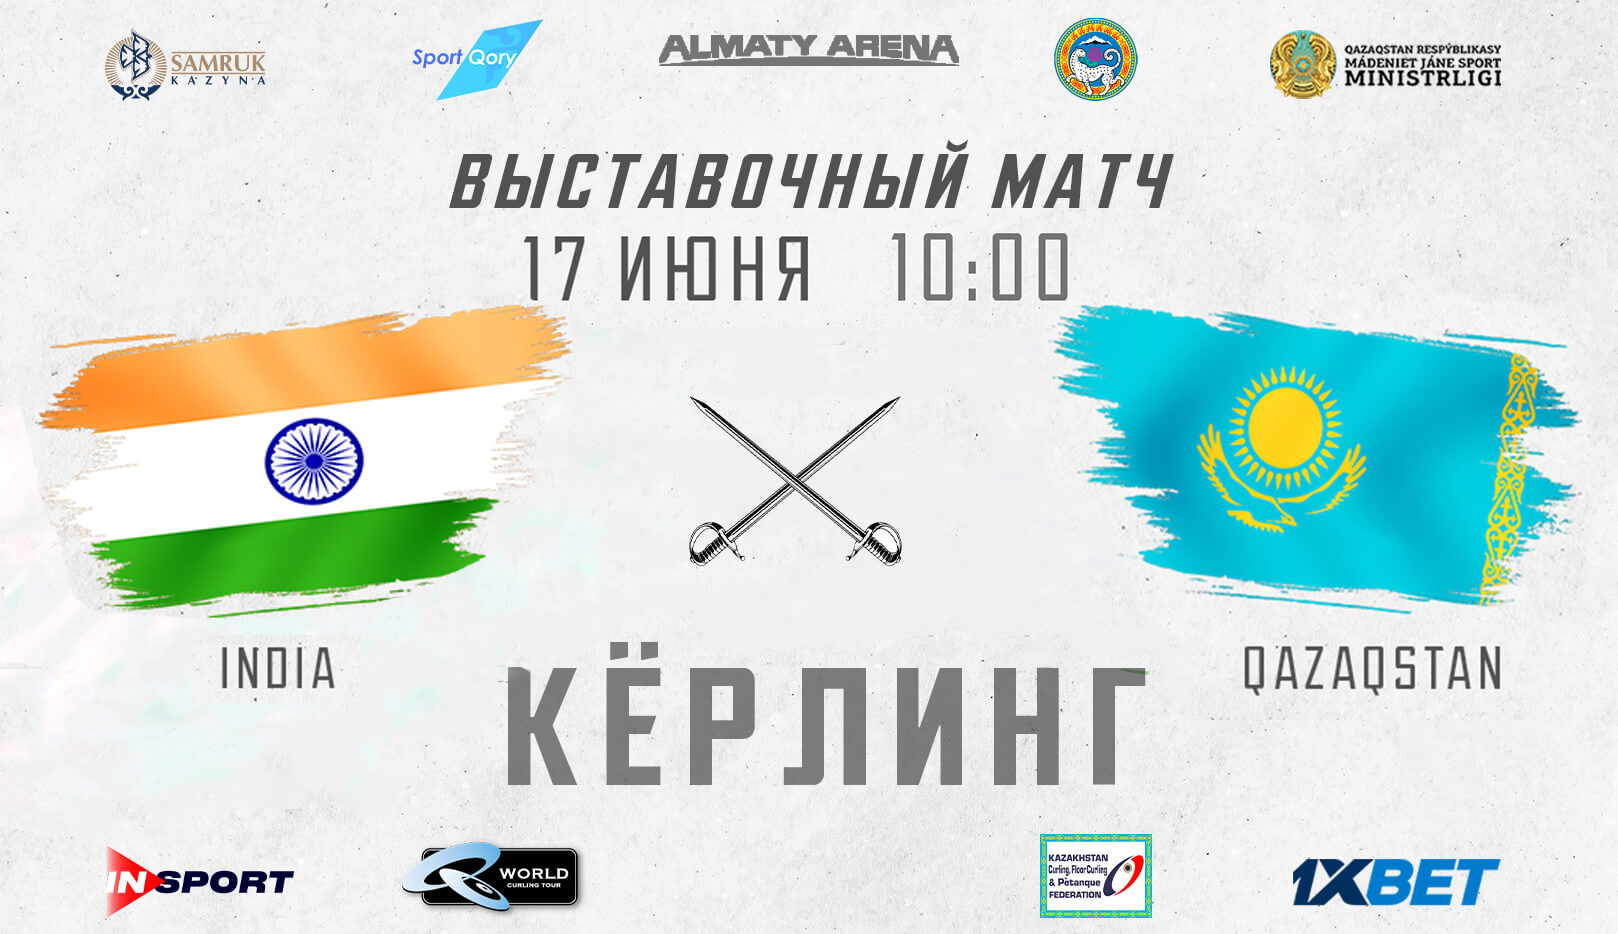 22nd Open Kazakhstan Curling Championship